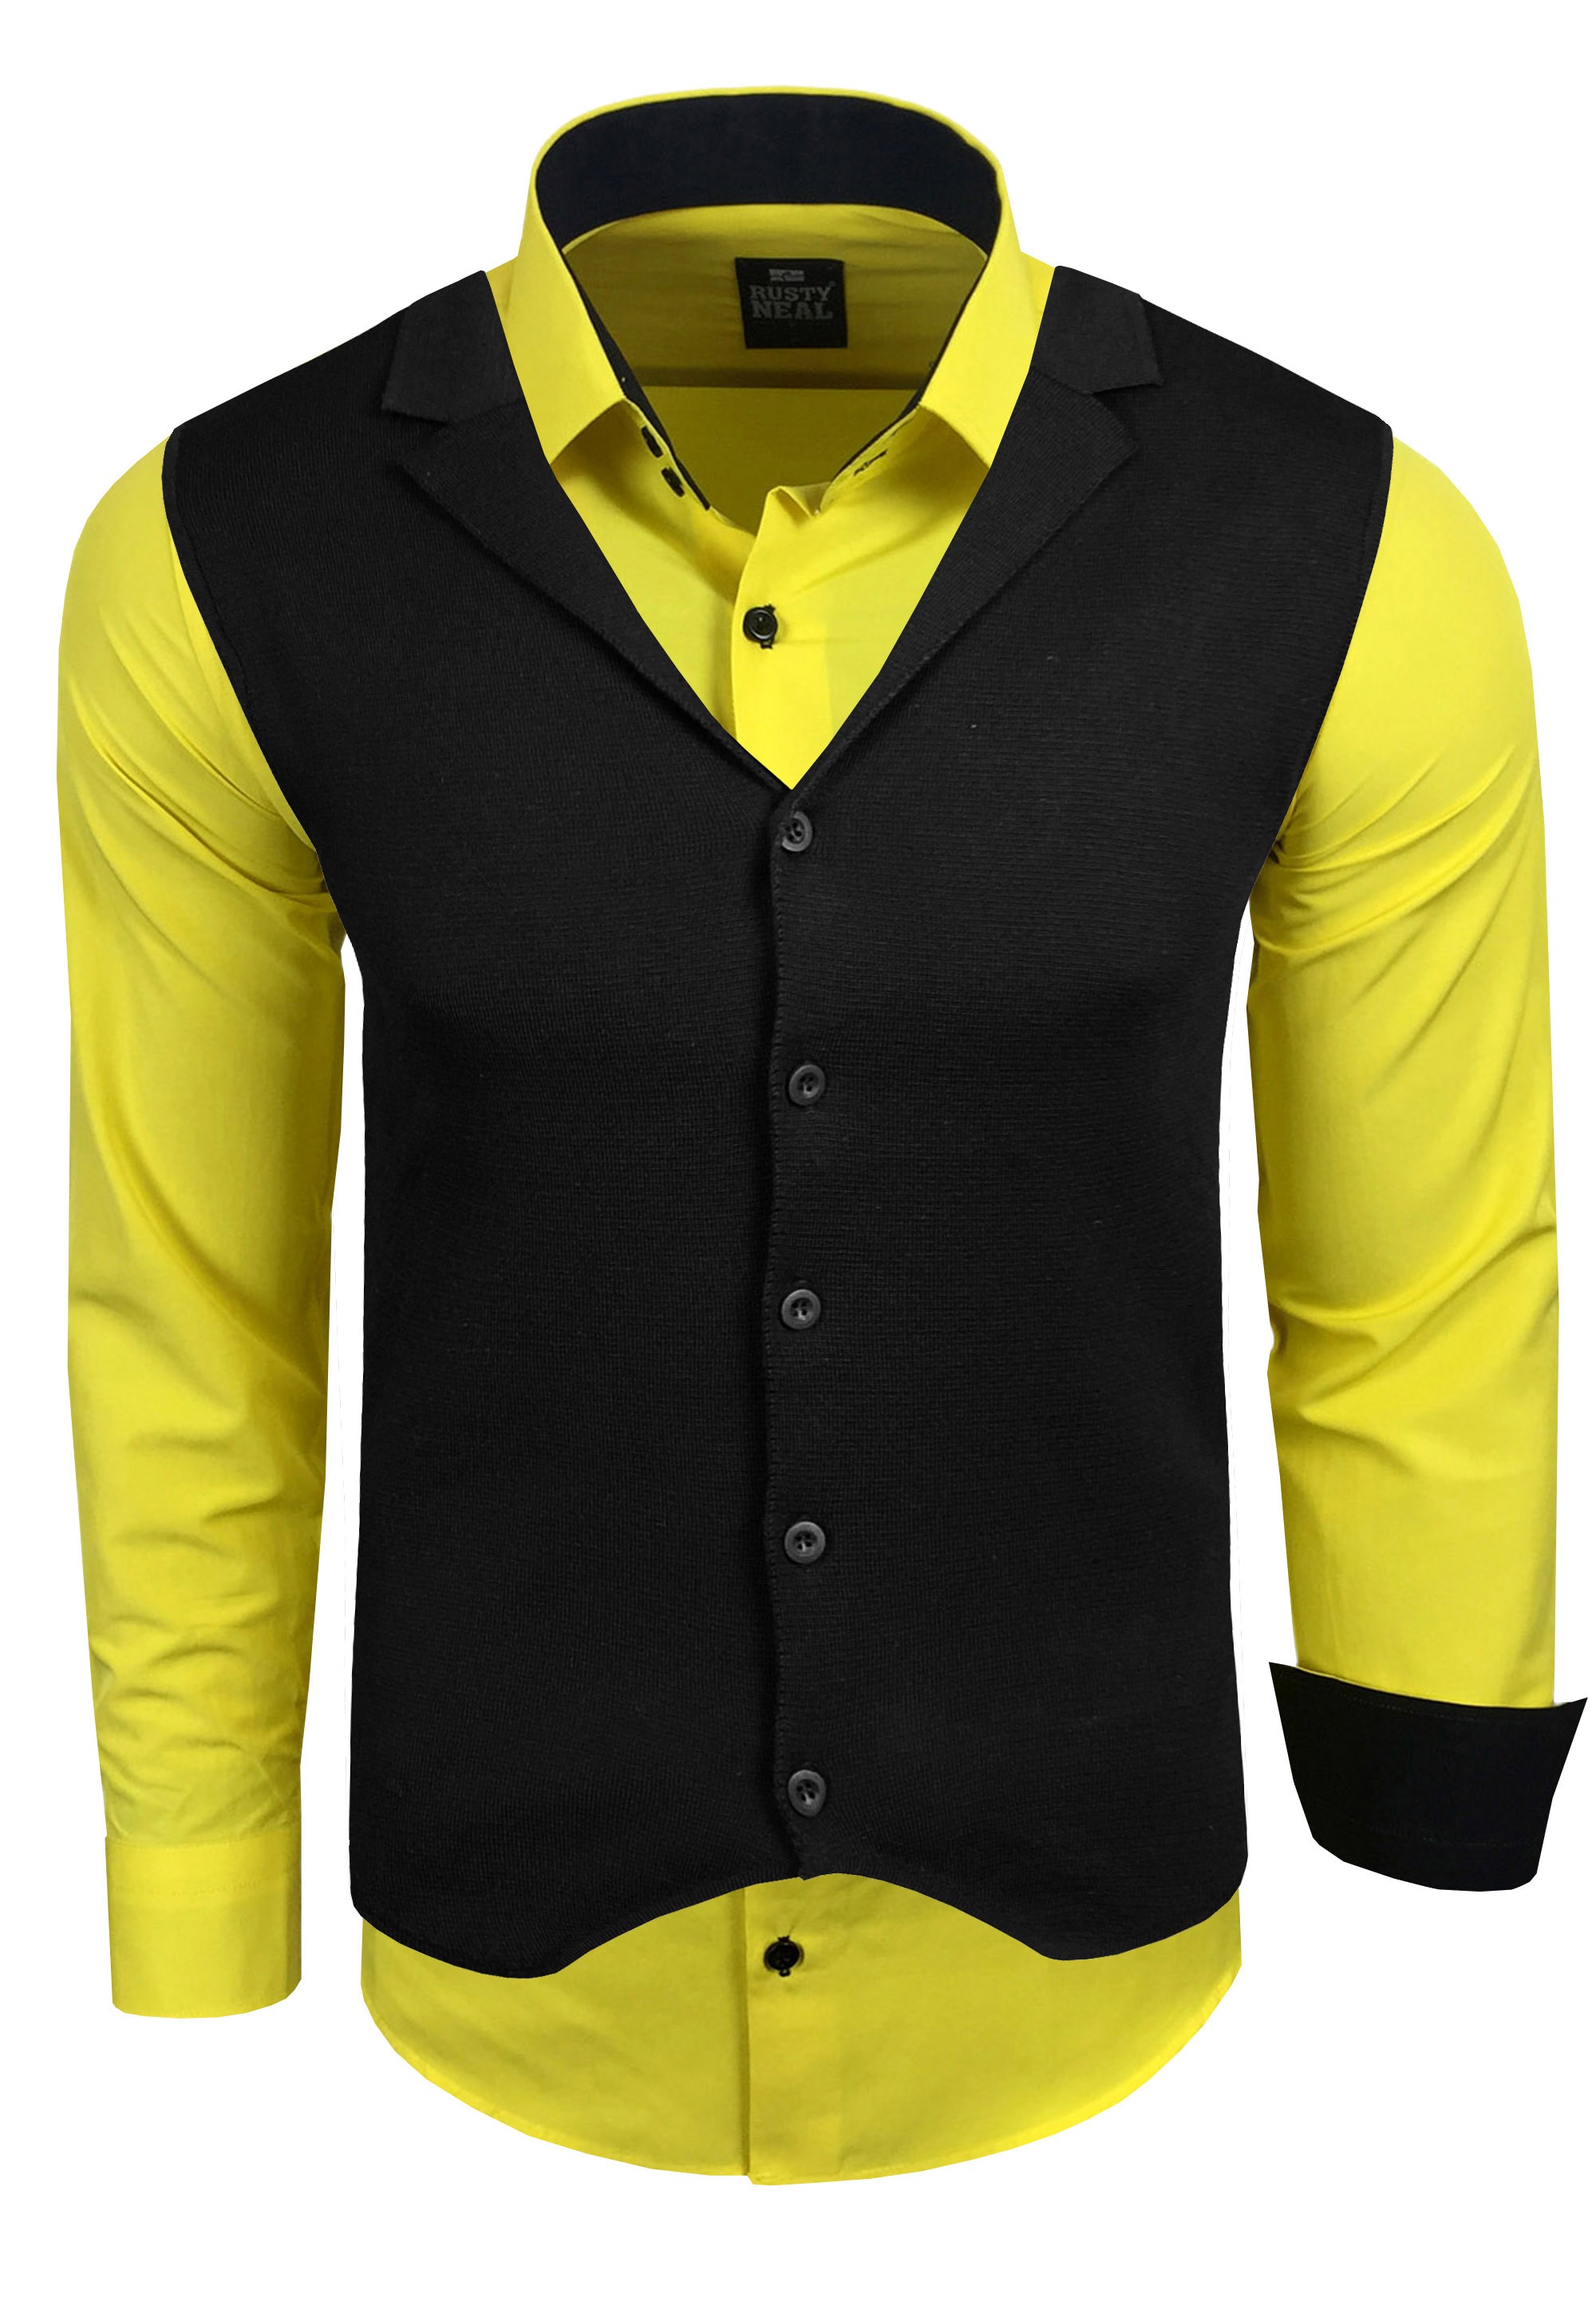 Rusty Neal Langarmhemd, inklusive Langarmhemd und Weste ▷ kaufen | BAUR